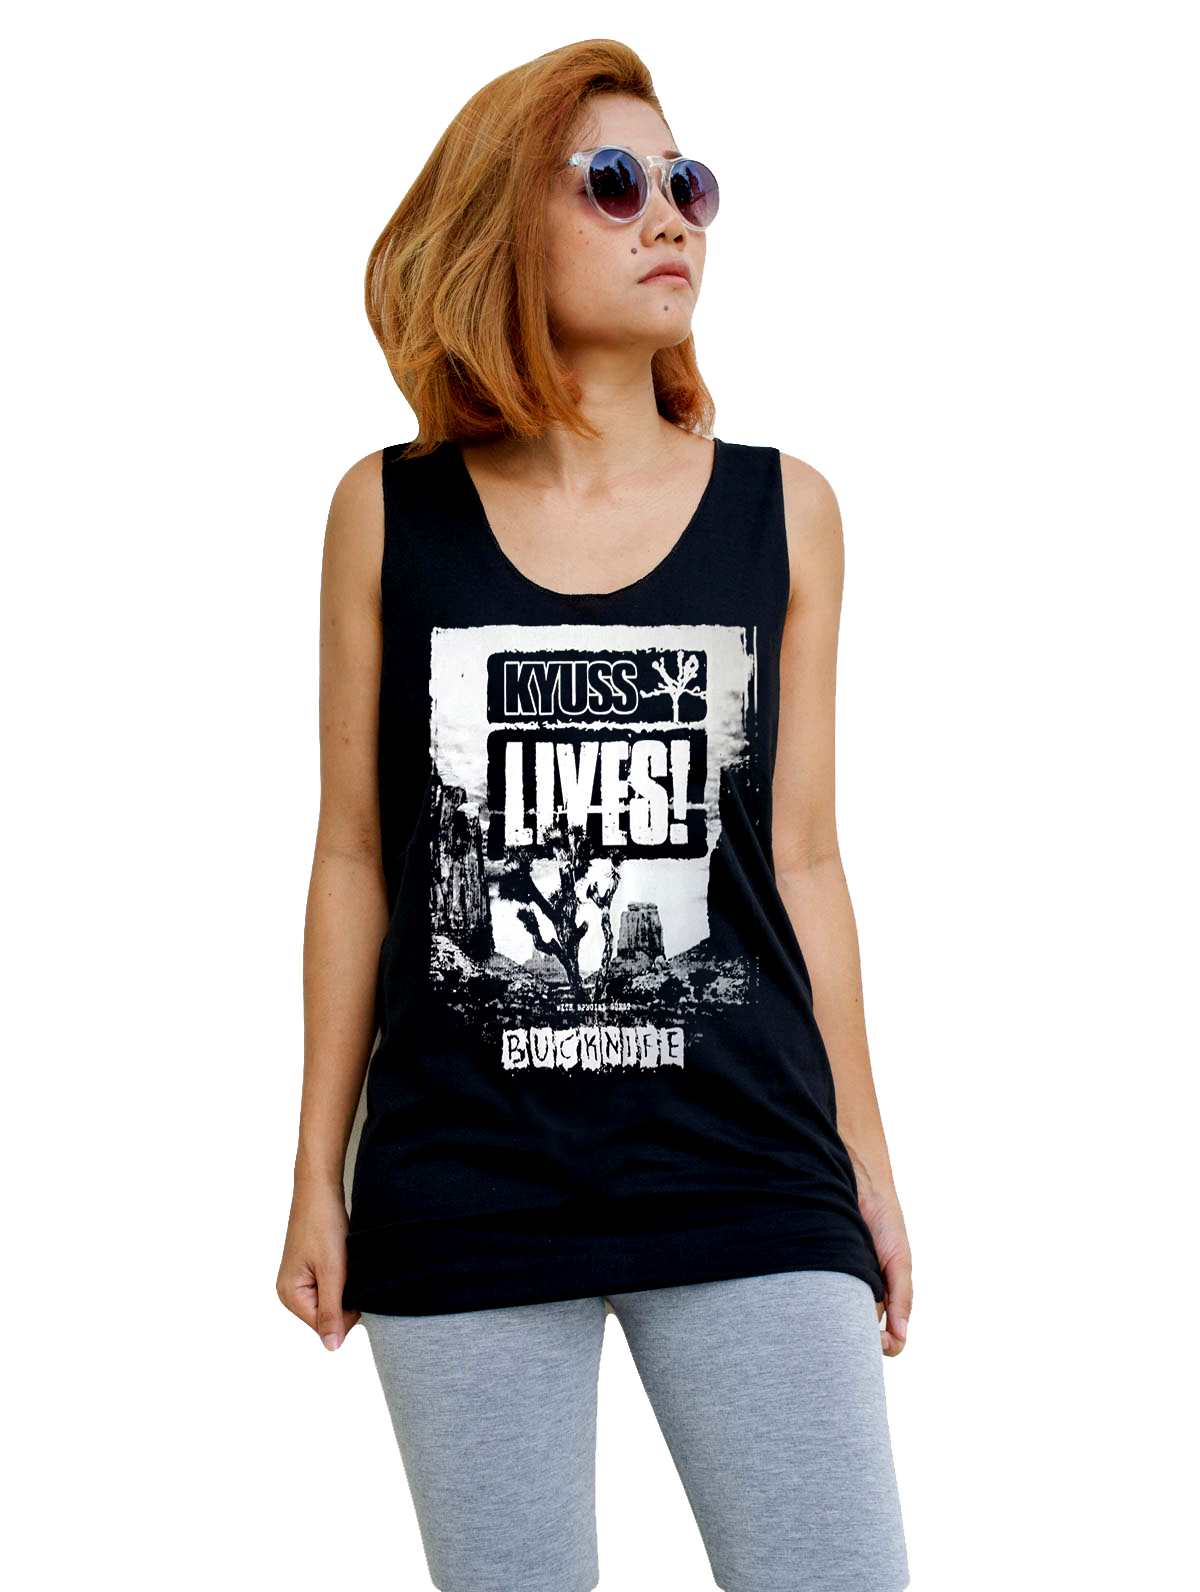 Unisex Kyuss Tank-Top Singlet vest Sleeveless T-shirt